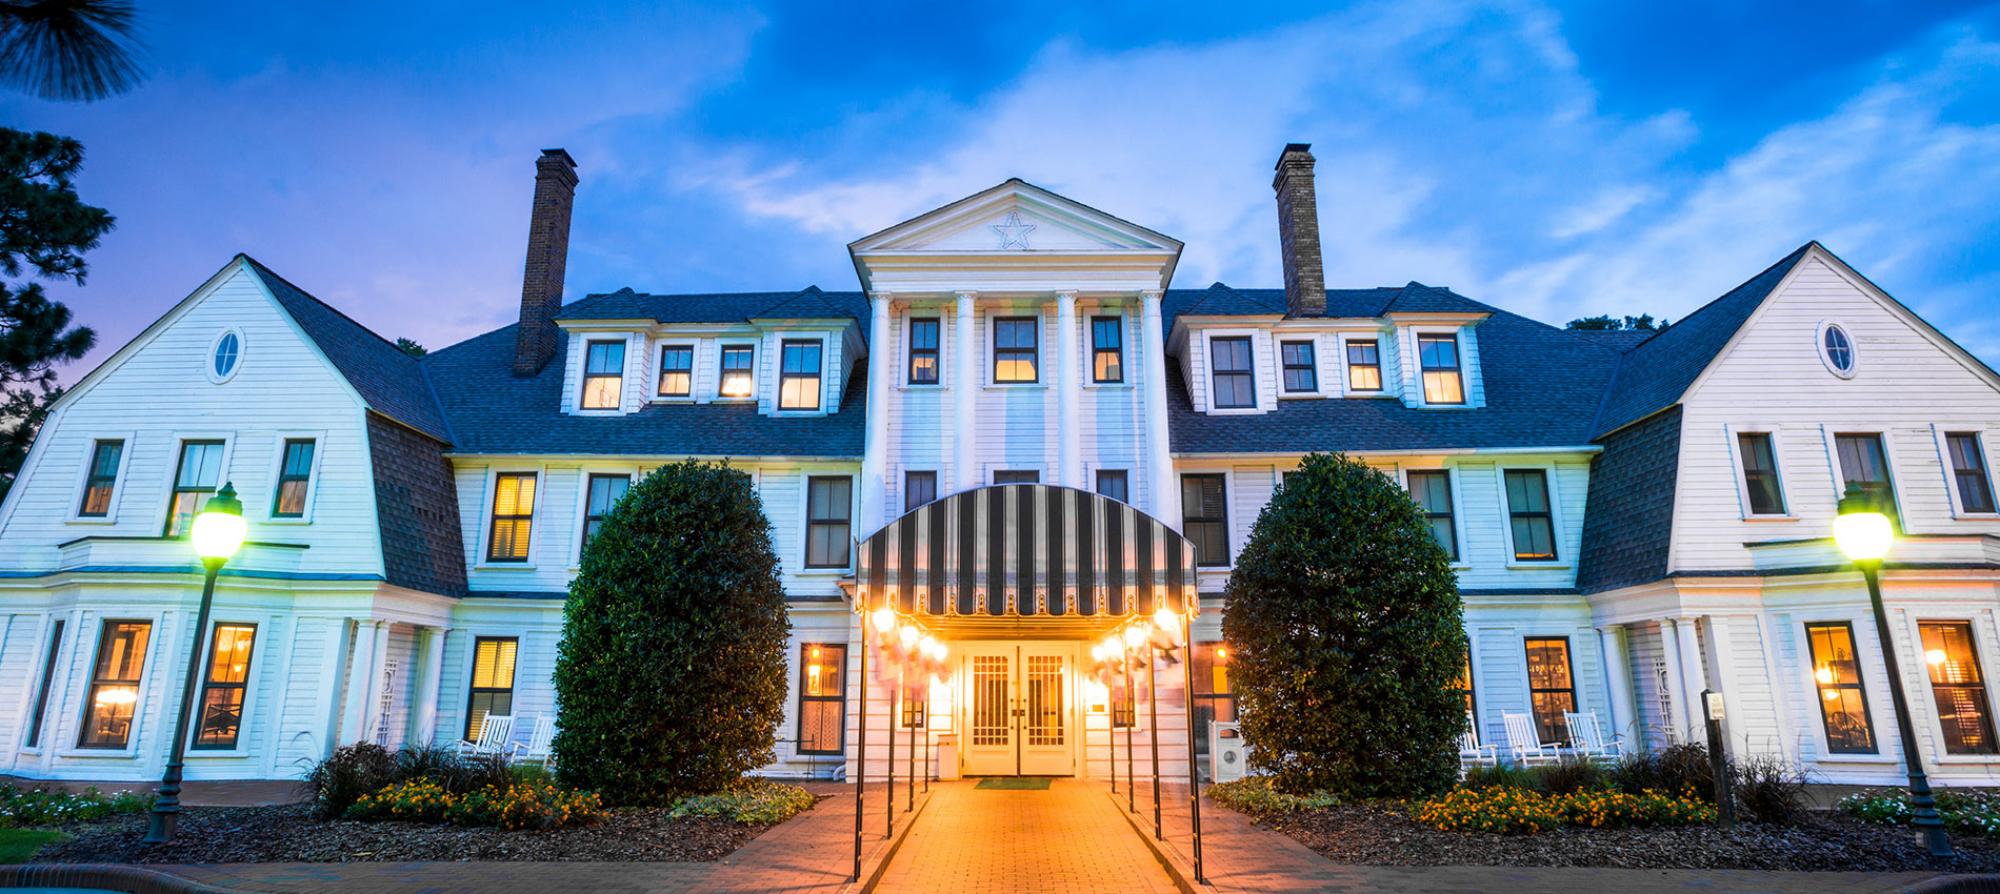 View The Holly Inn - Pinehurst Resort's lovely hotel in brilliant North Carolina.